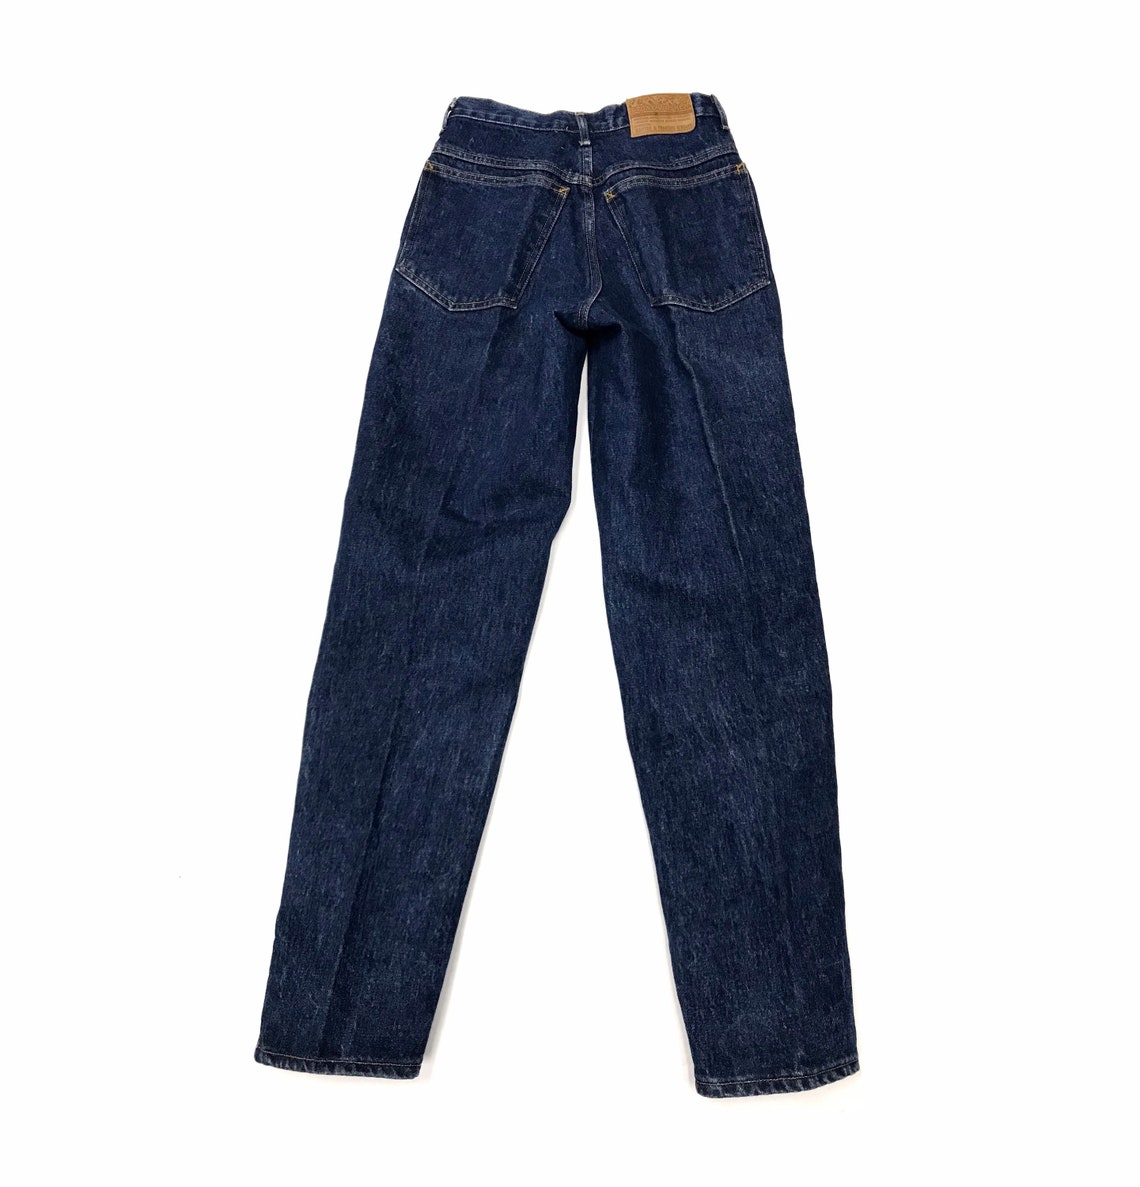 Vintage 80s Girbaud jeans high rise straight leg denim 1980s | Etsy